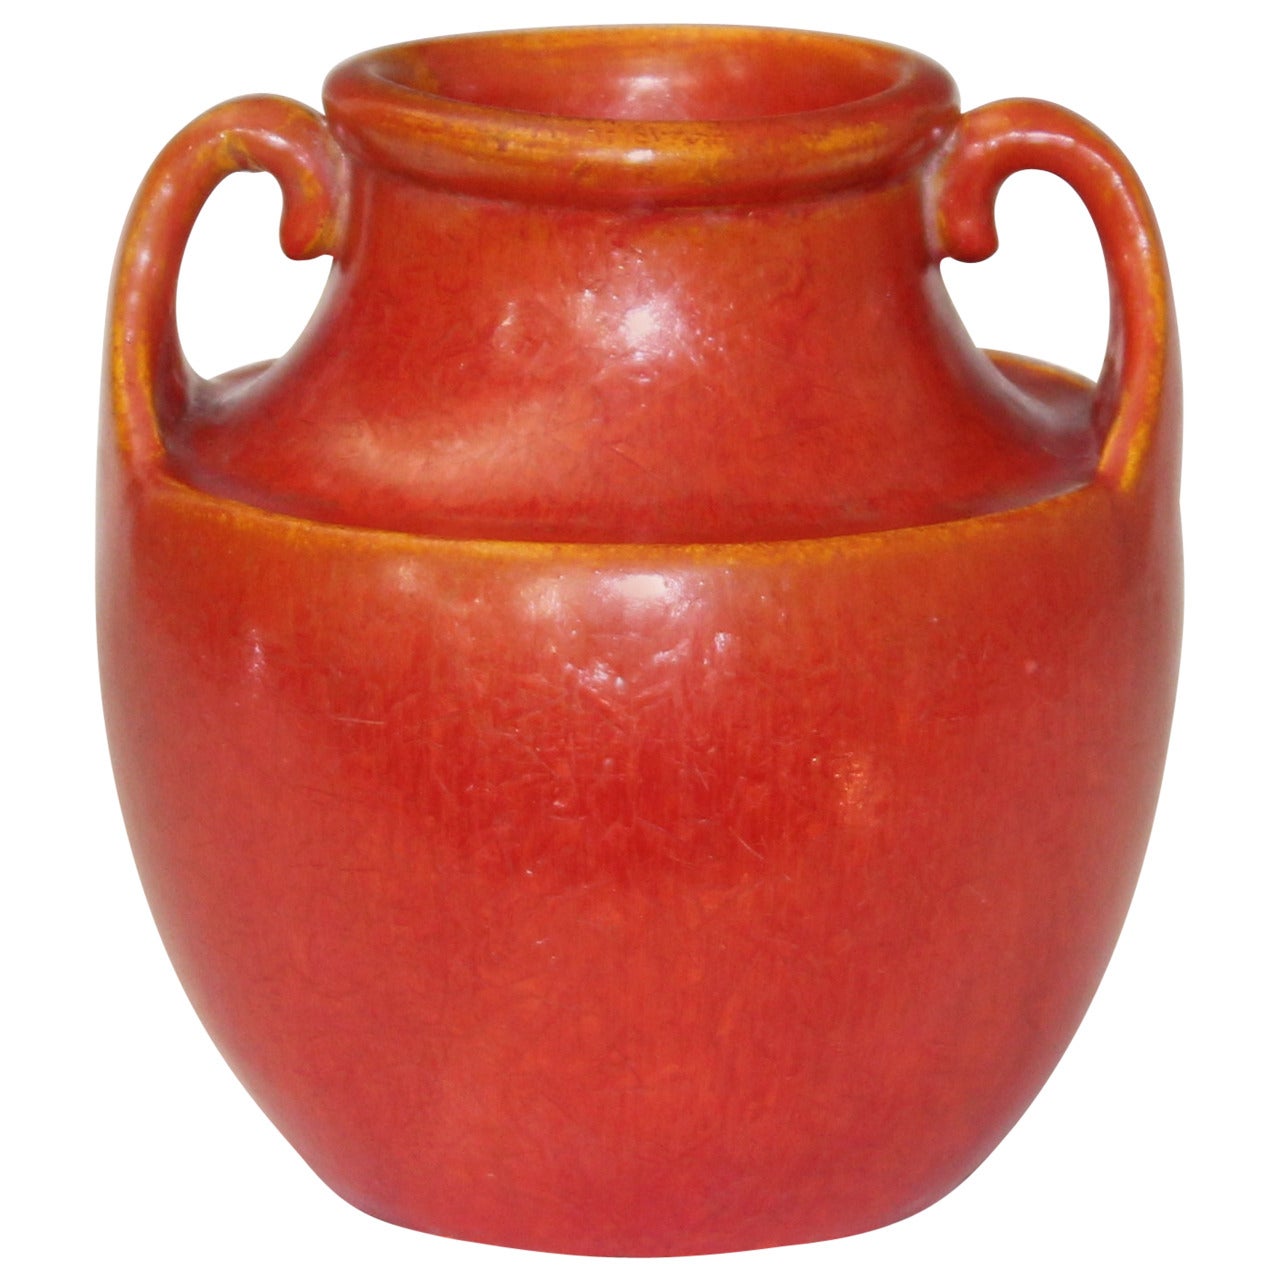 Awaji Pottery Art Deco Vase in Crystalline Chrome Red Glaze